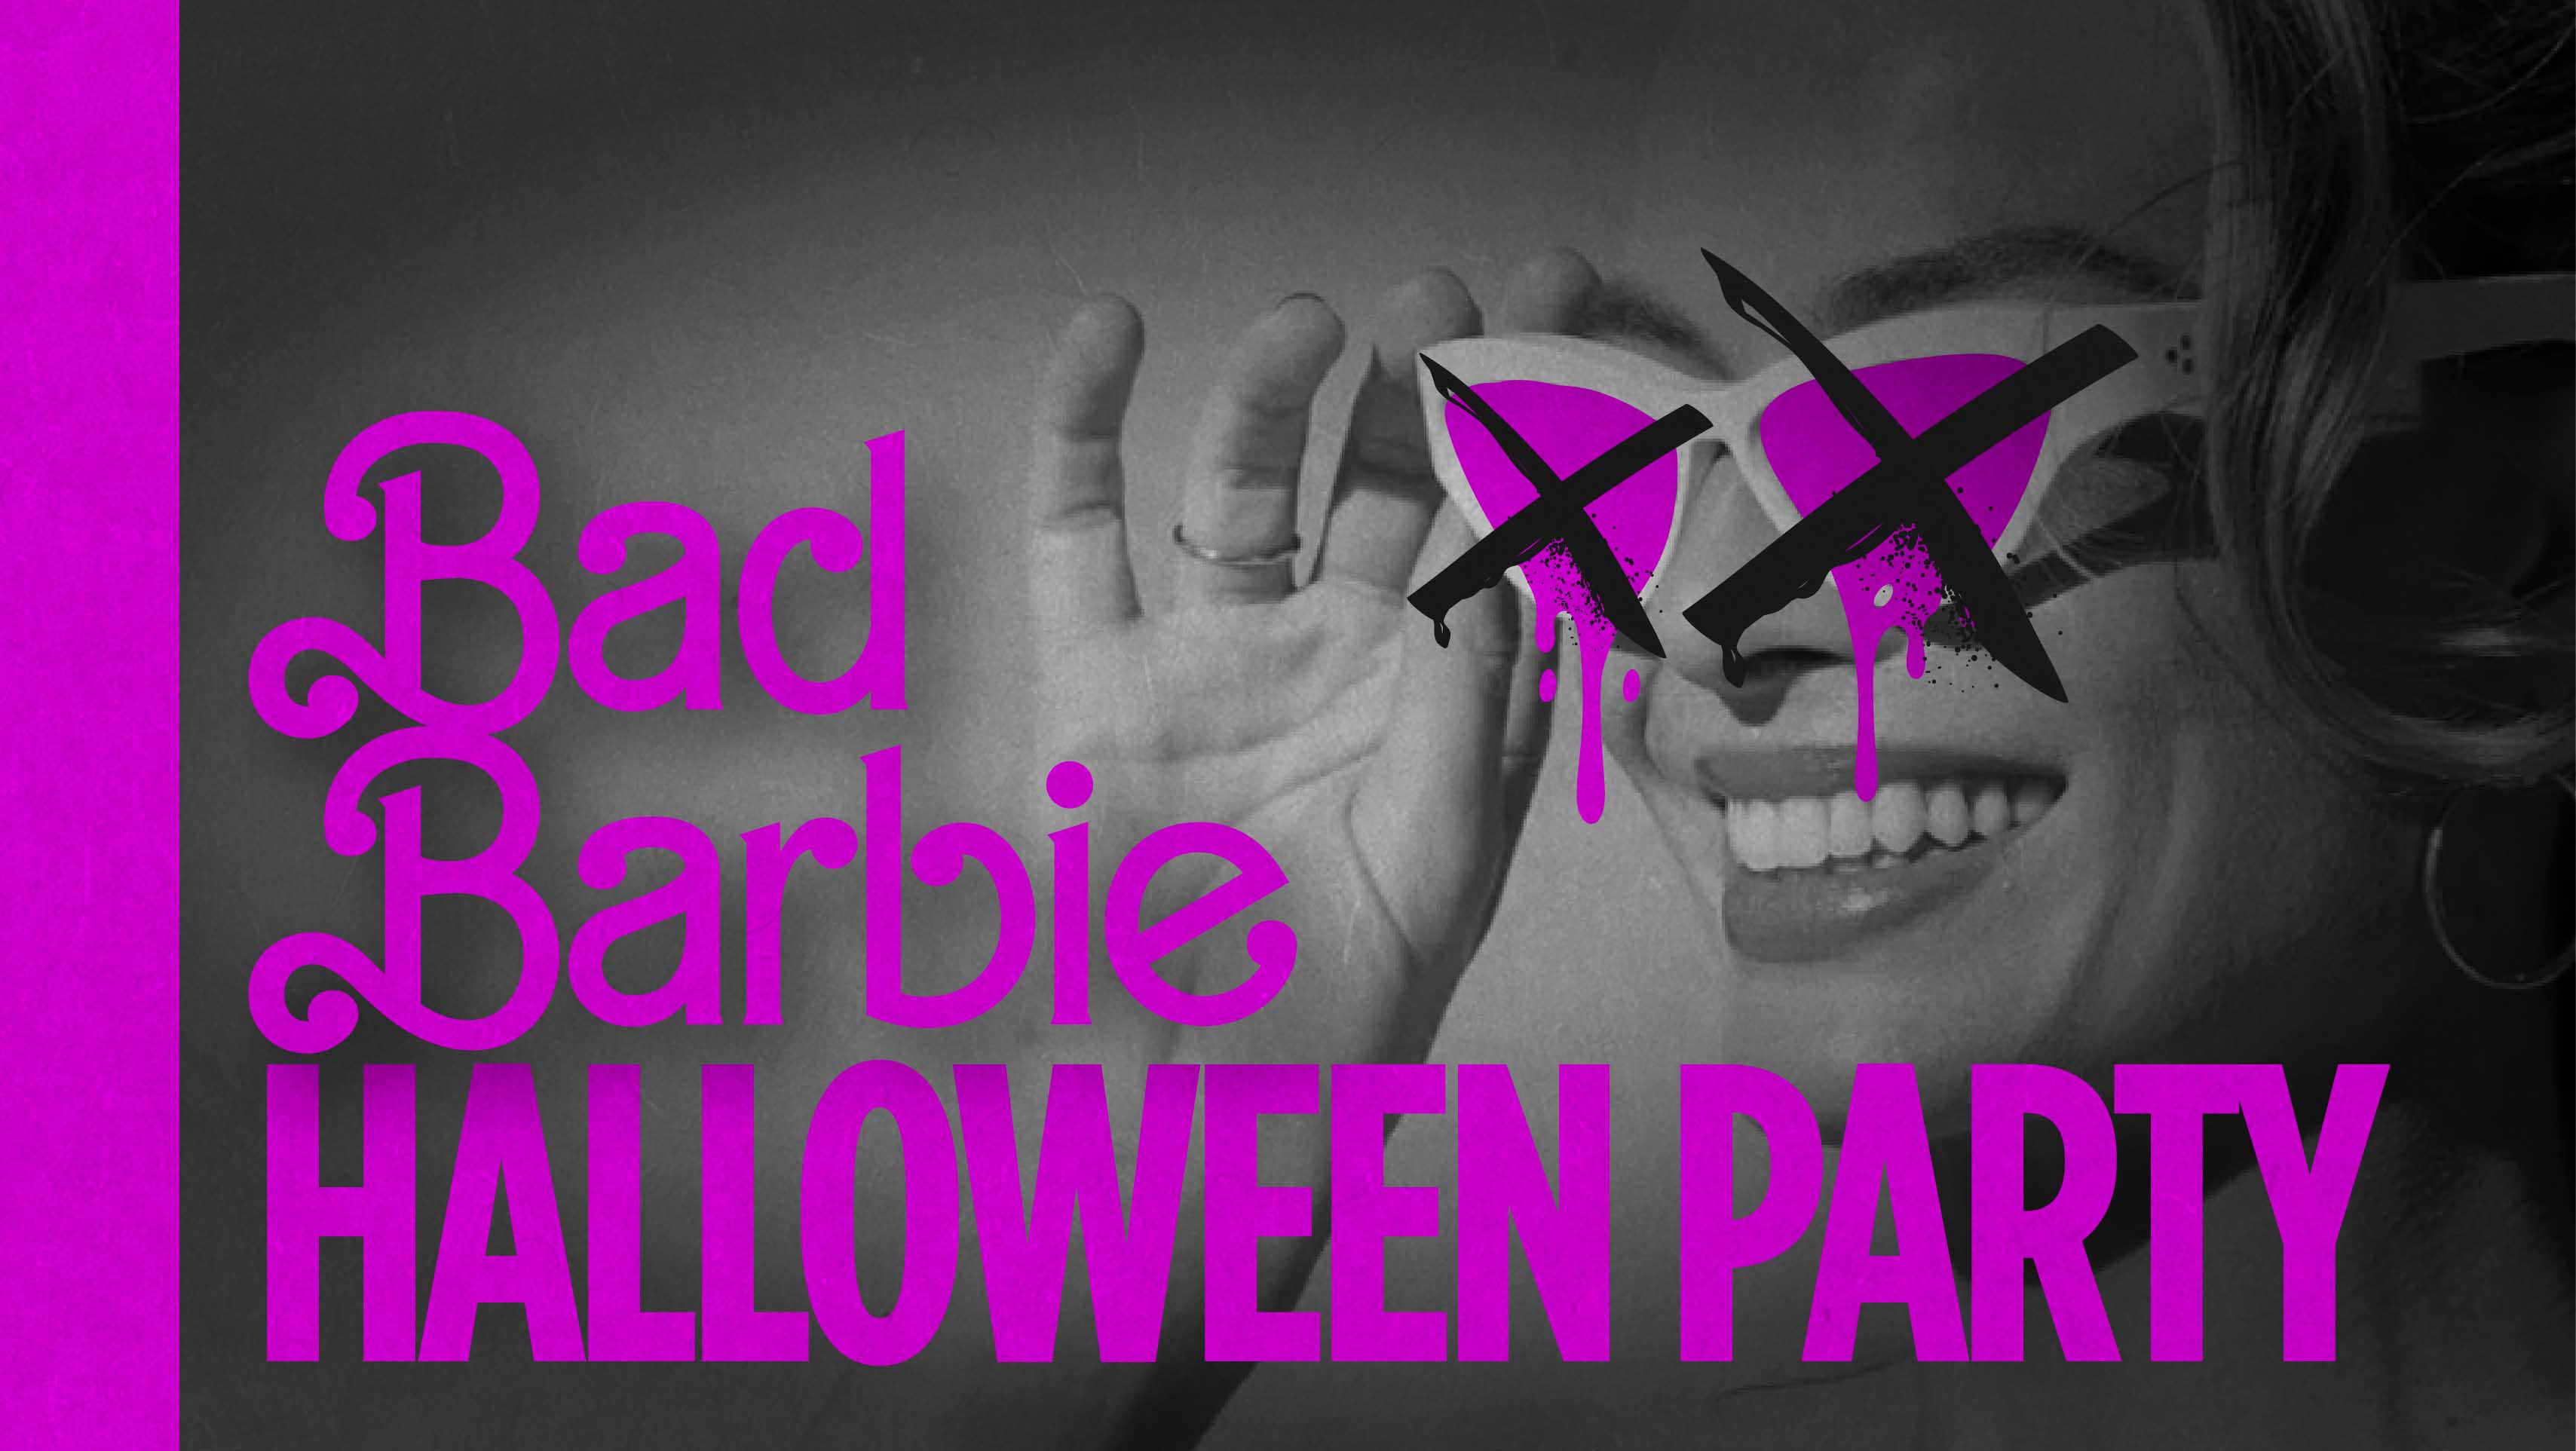 Bad Barbz Halloween Special!  // LEVEL Nightclub